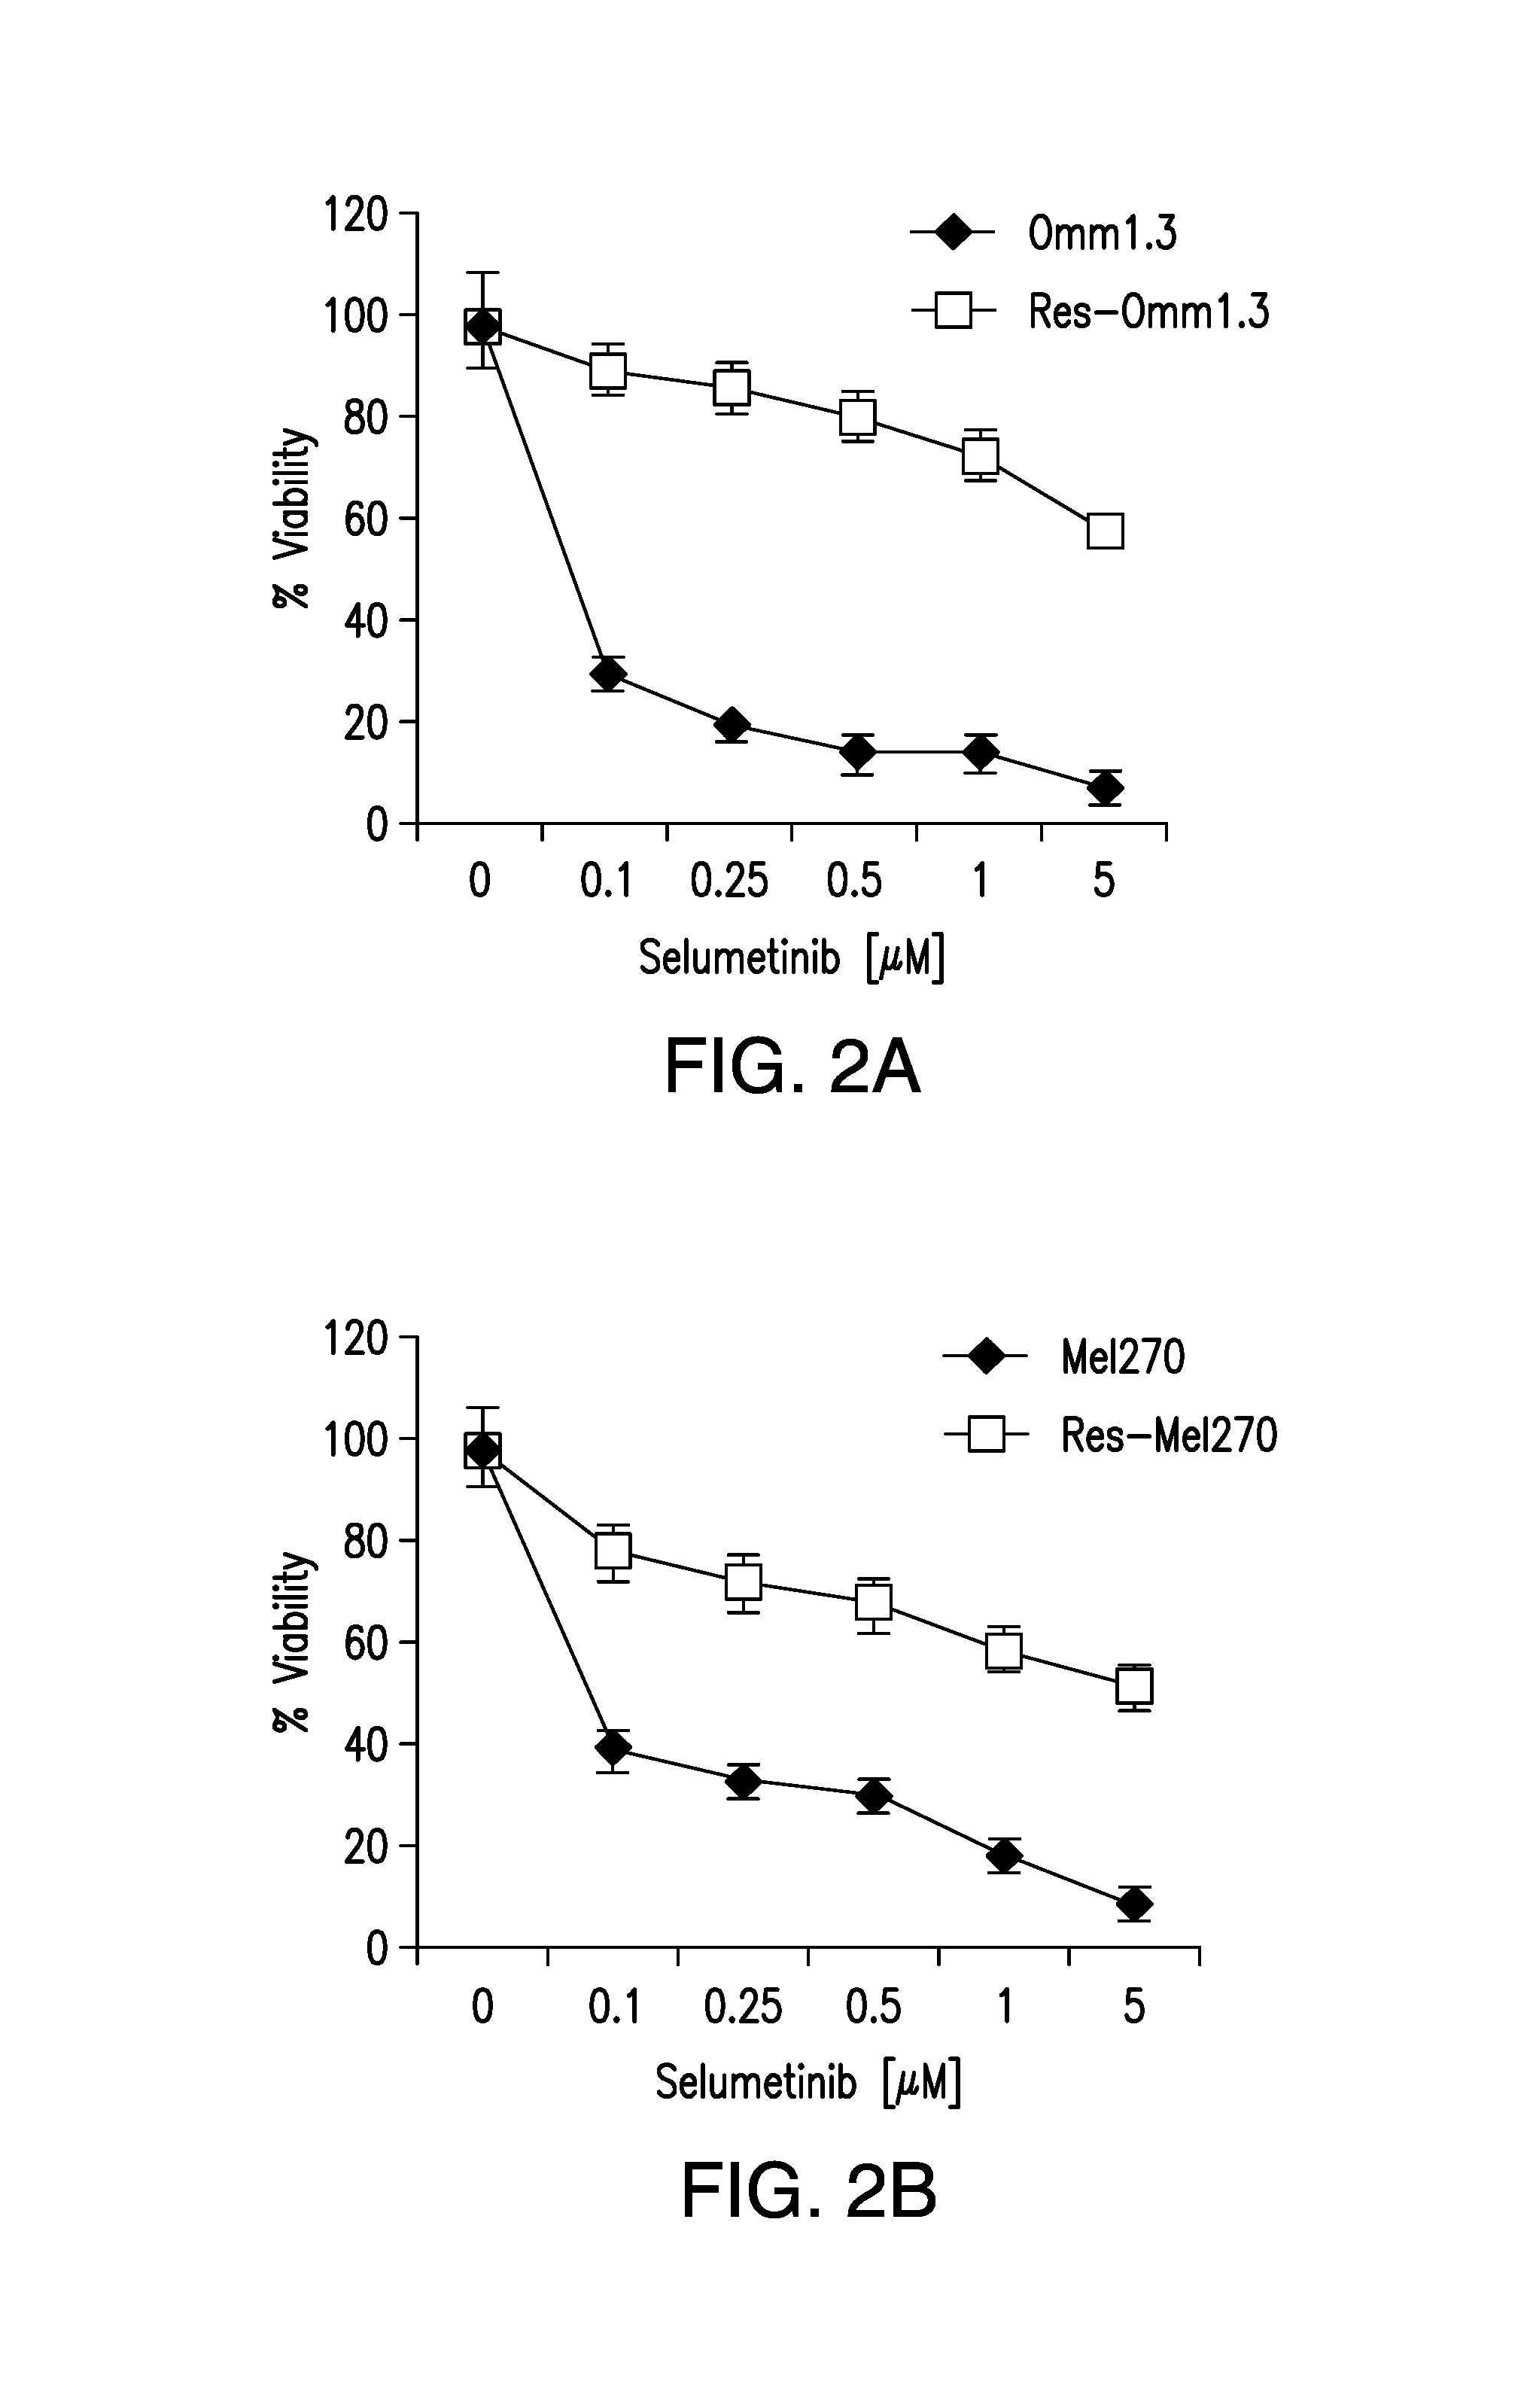 Ddx43 as a biomarker of resistance to mek1/2 inhibitors